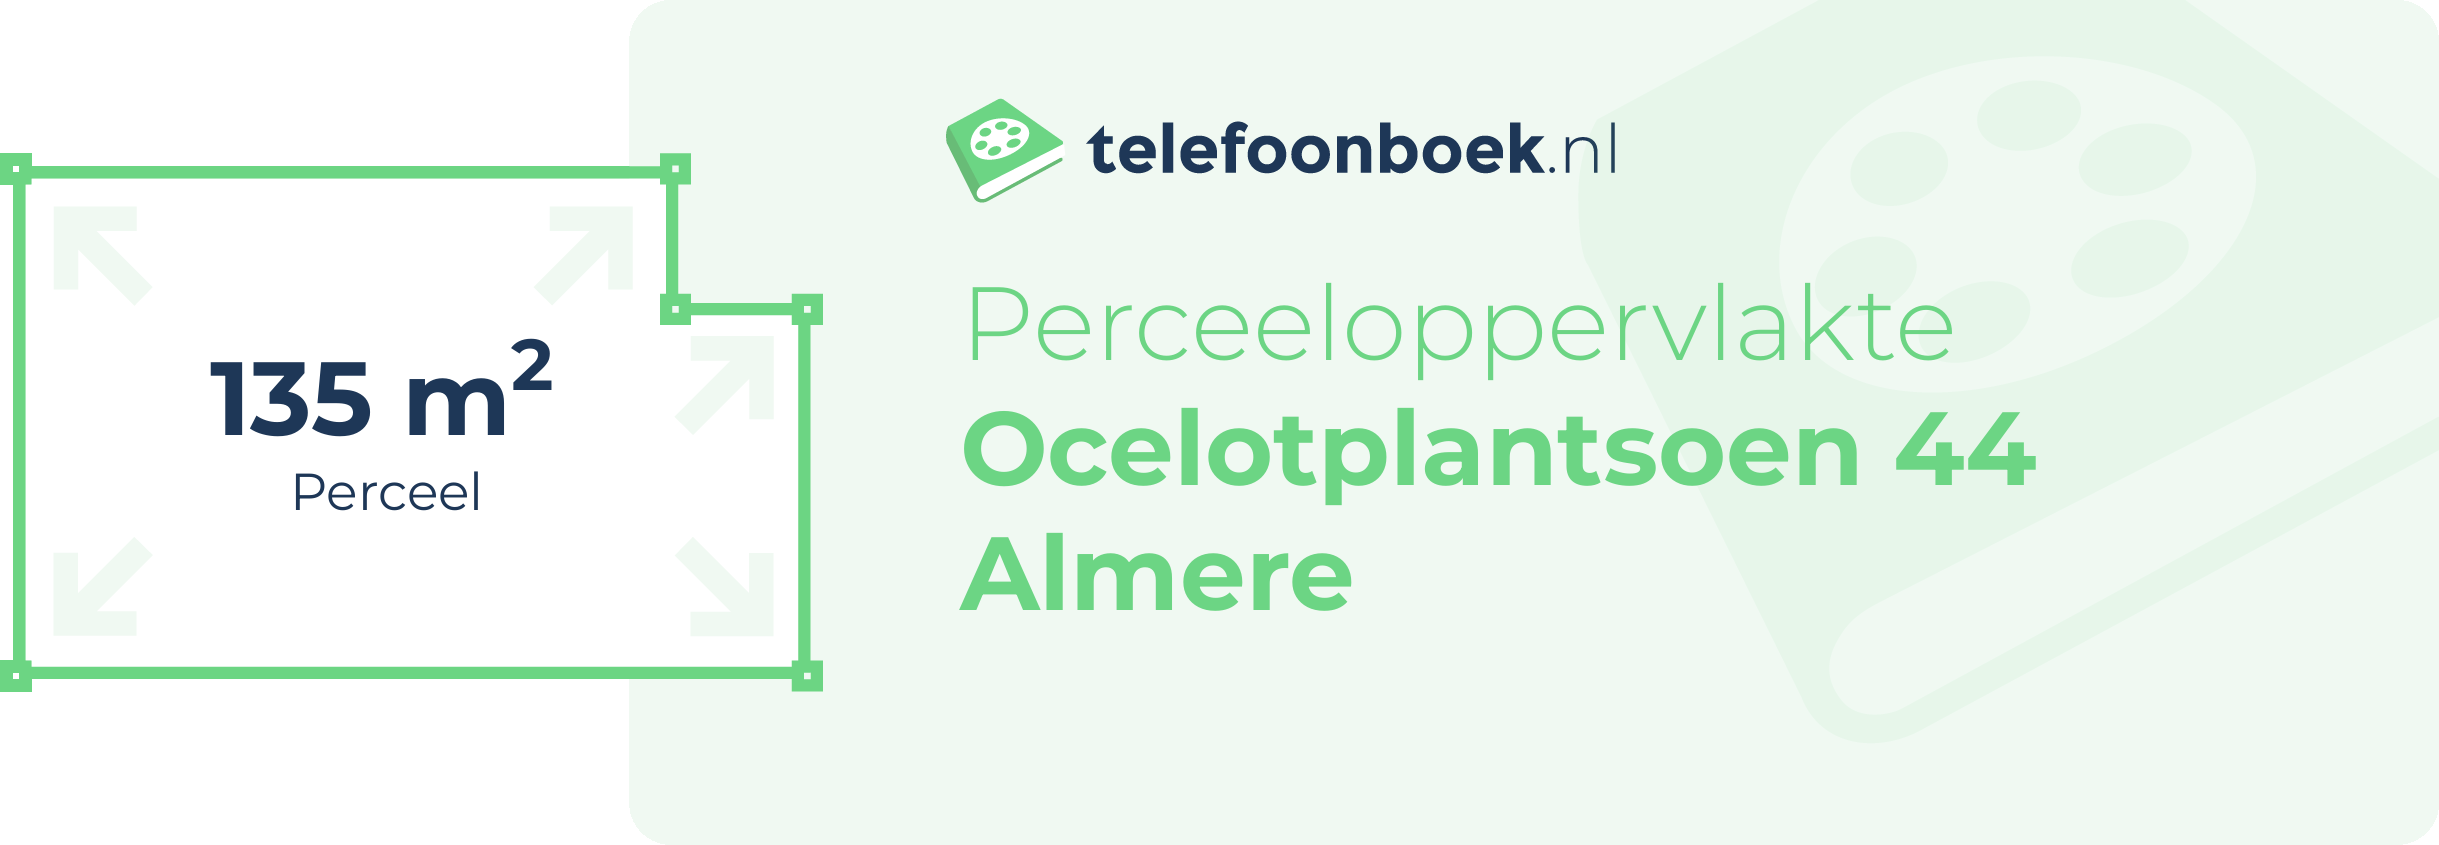 Perceeloppervlakte Ocelotplantsoen 44 Almere